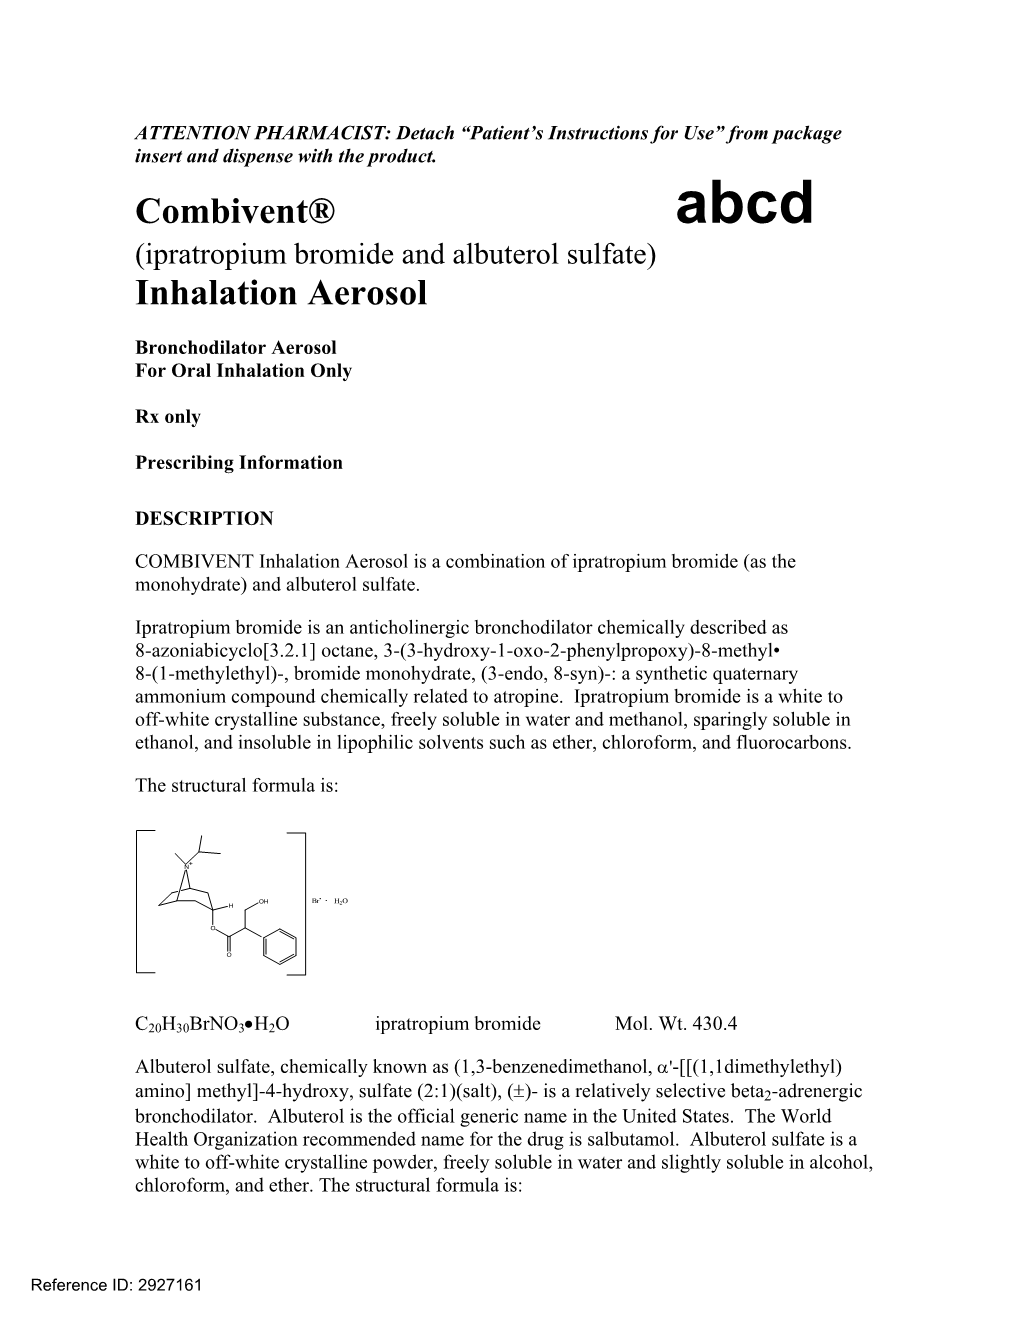 Abcd (Ipratropium Bromide and Albuterol Sulfate) Inhalation Aerosol